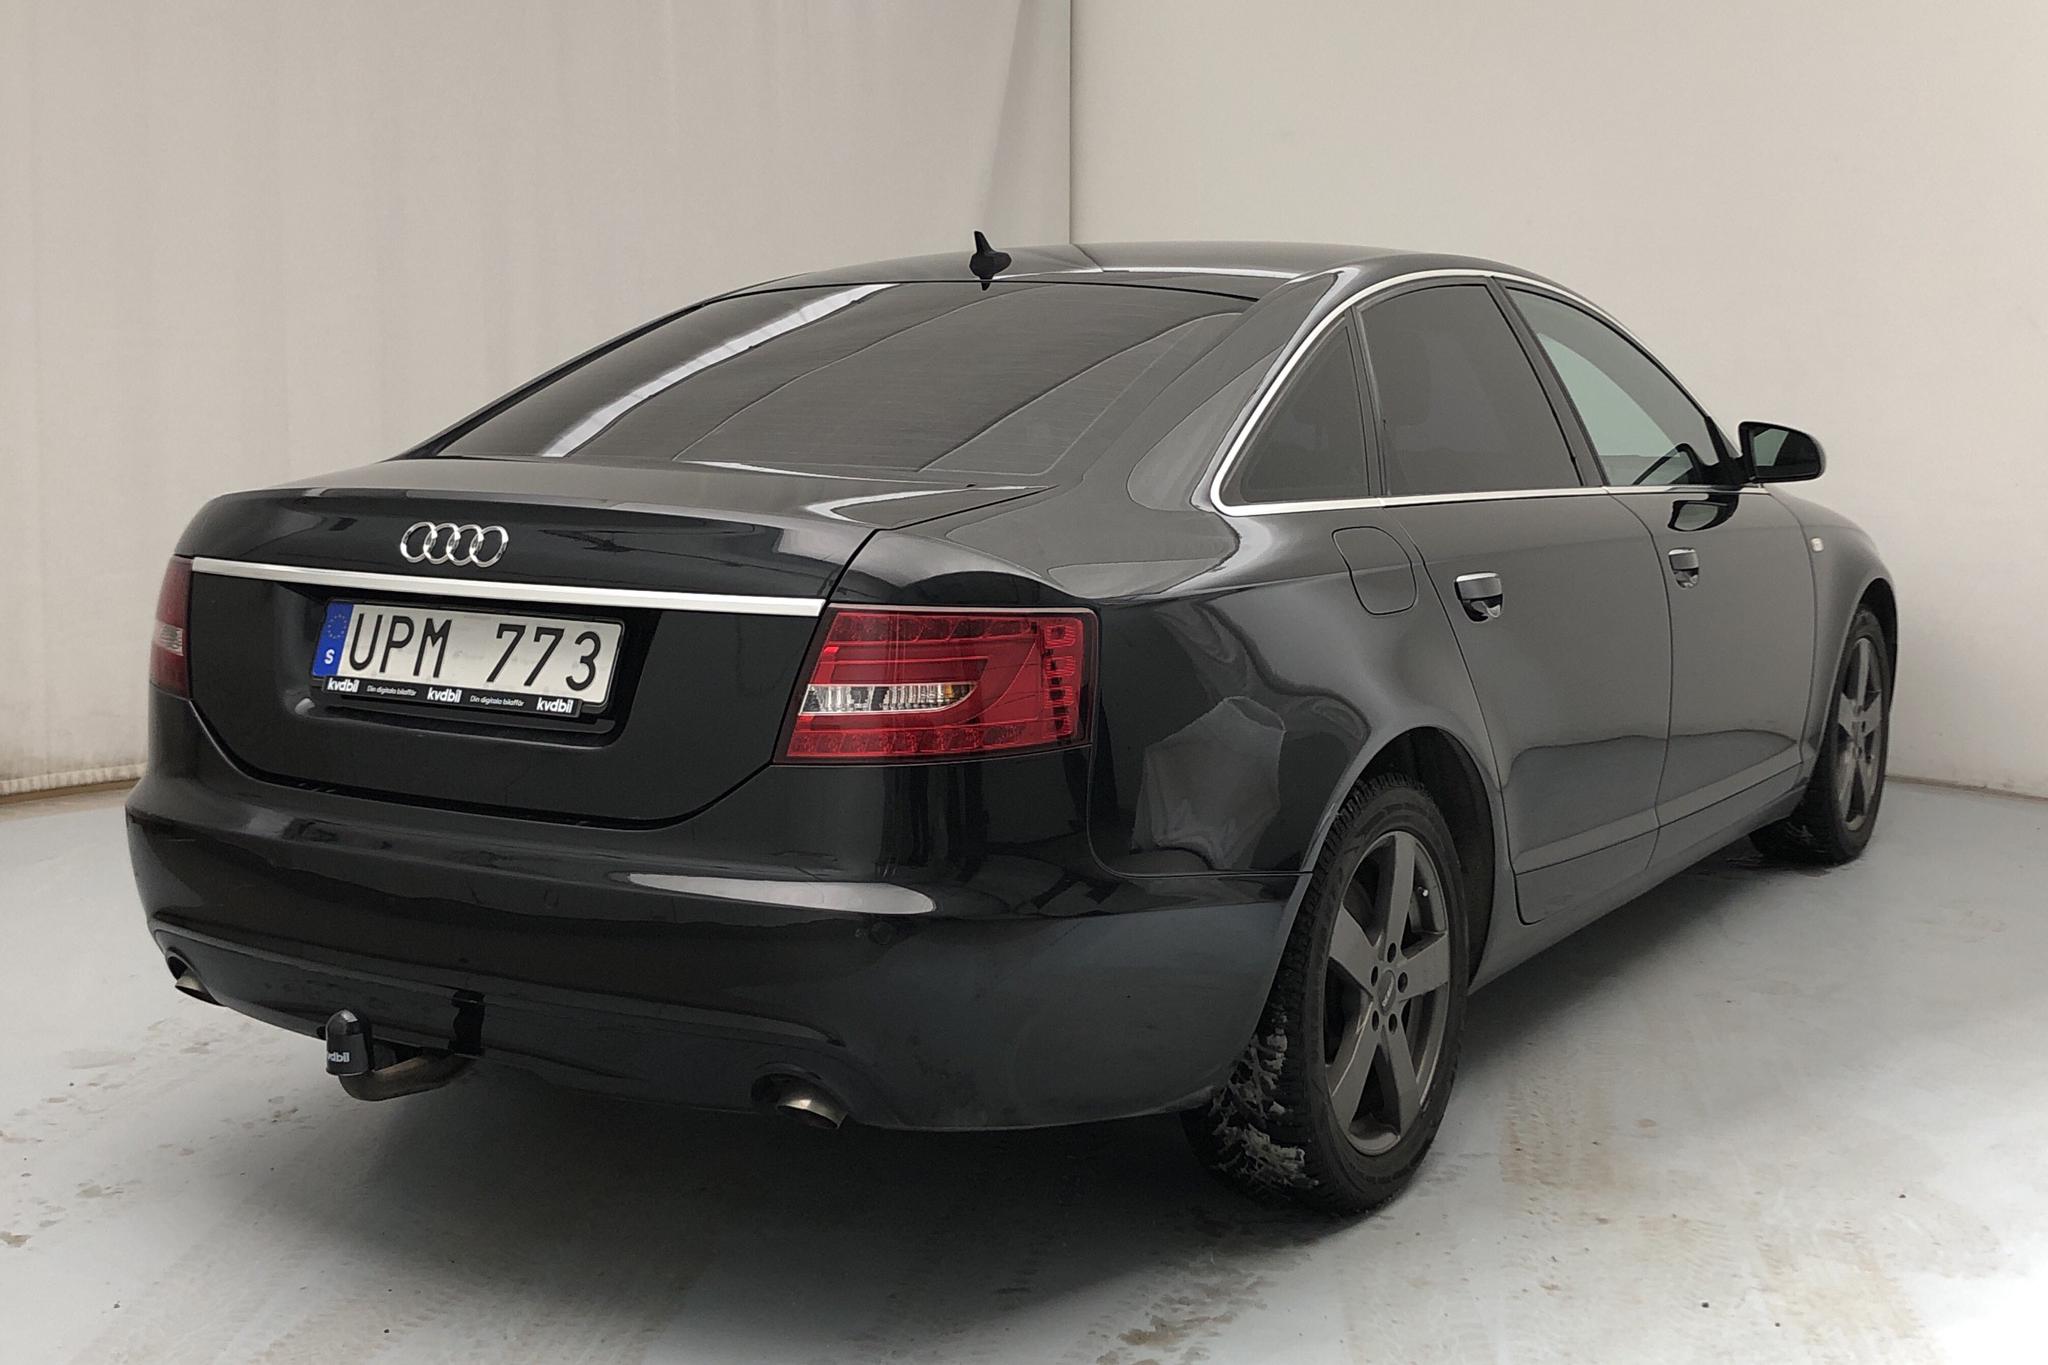 Audi A6 3.0 TDI quattro (233hk) - 225 530 km - Automatic - black - 2008